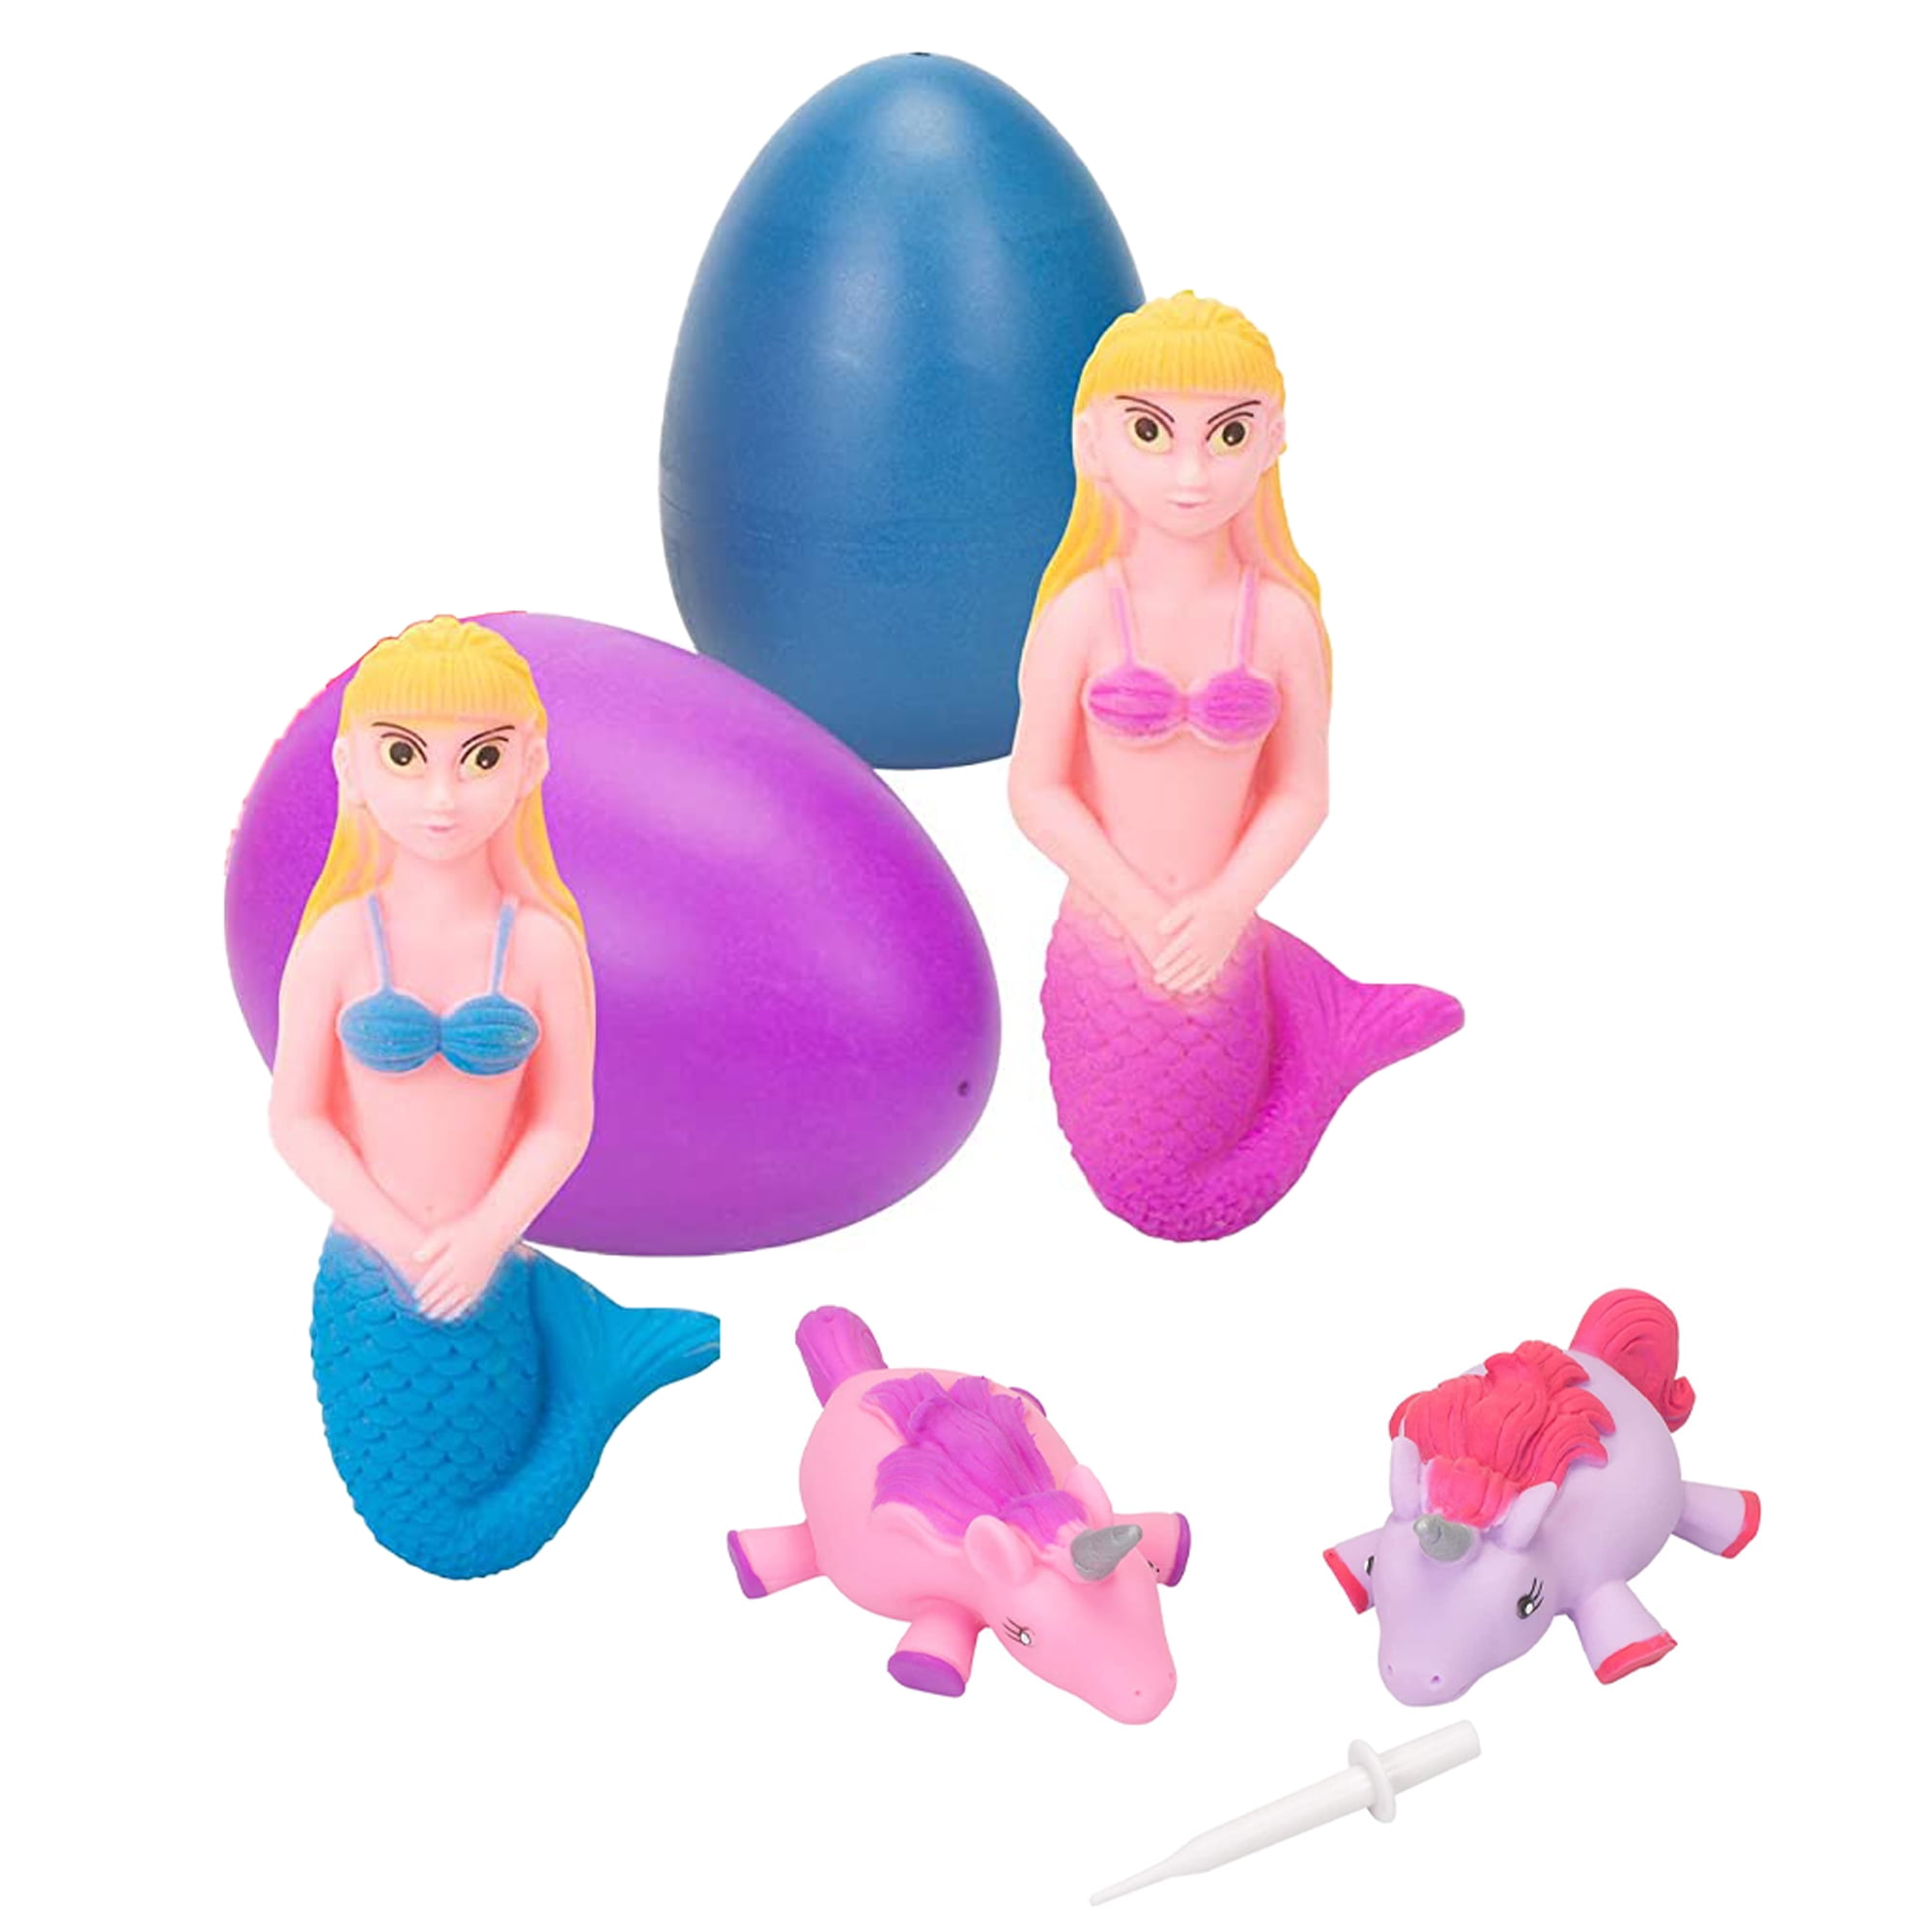 Grow Your Own Mermaid Girls Toy Jumbo Rainbow Egg 